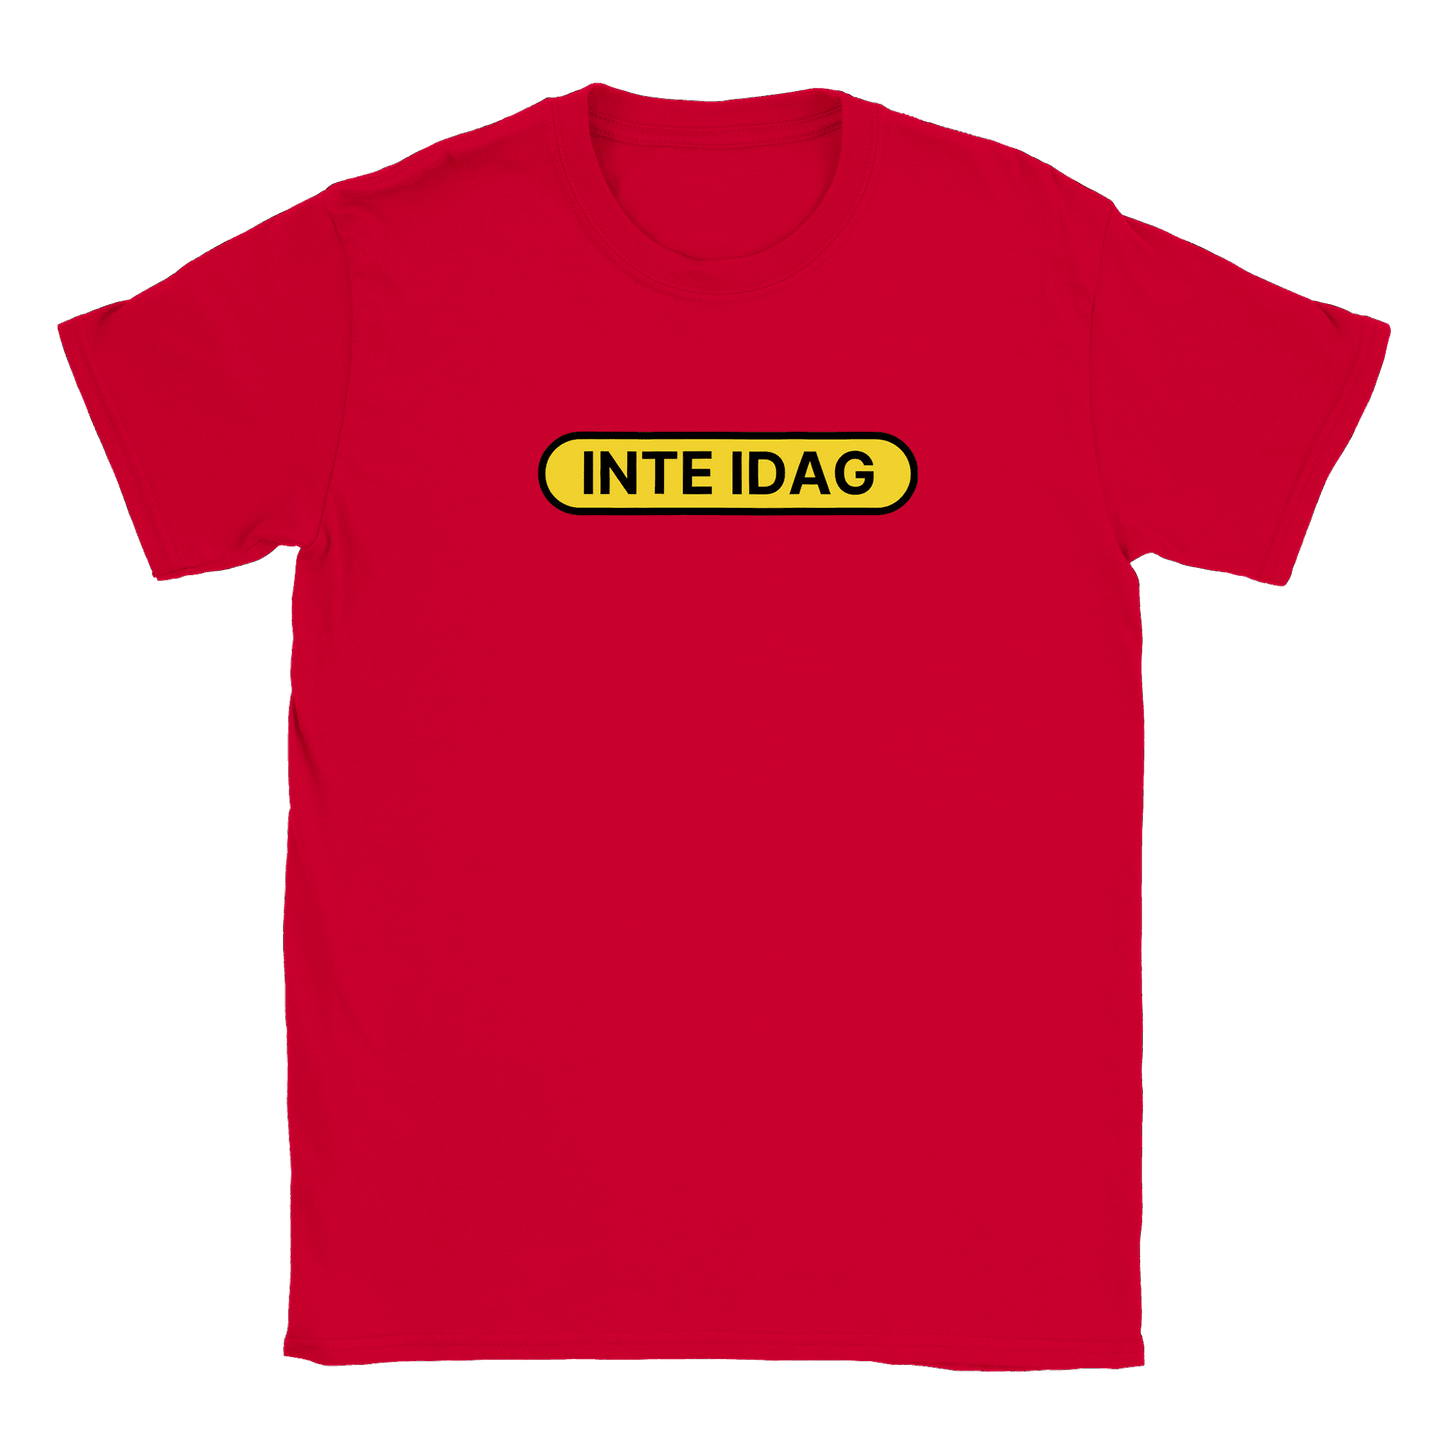 Inte idag - T-shirt Röd